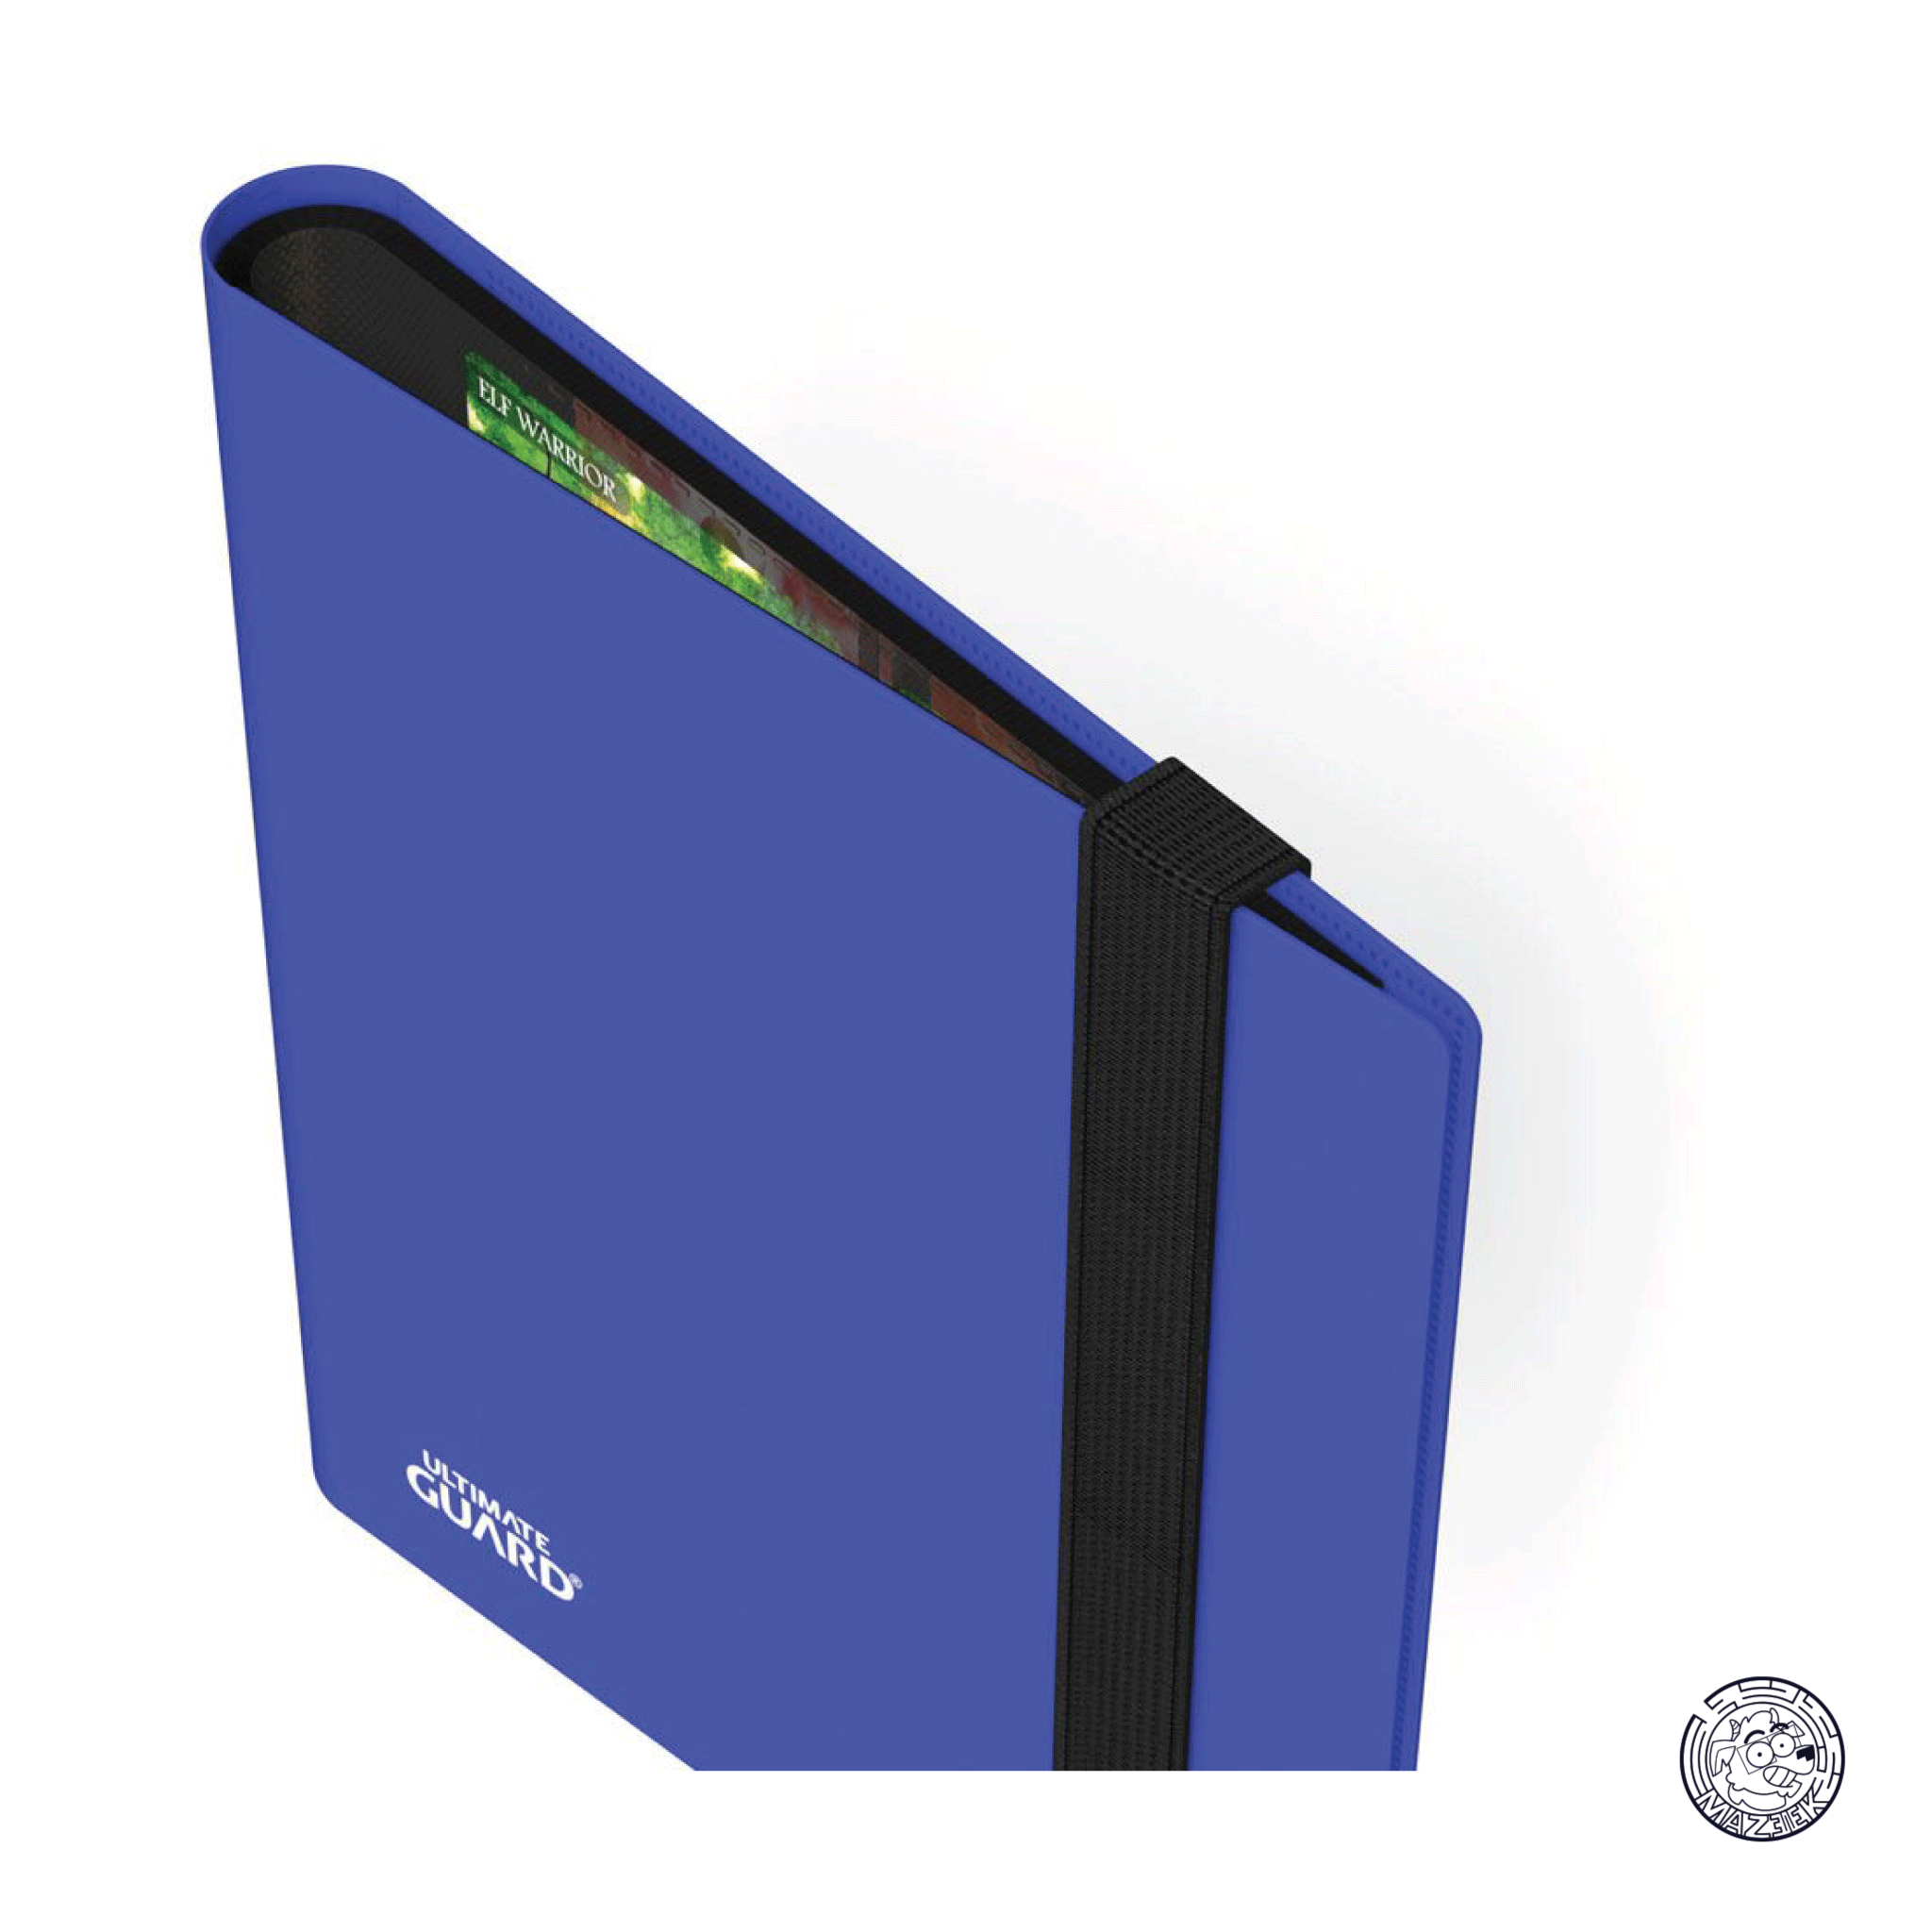 Ultimate Guard - Flexxfolio 160 - 8-Pocket (Blue)